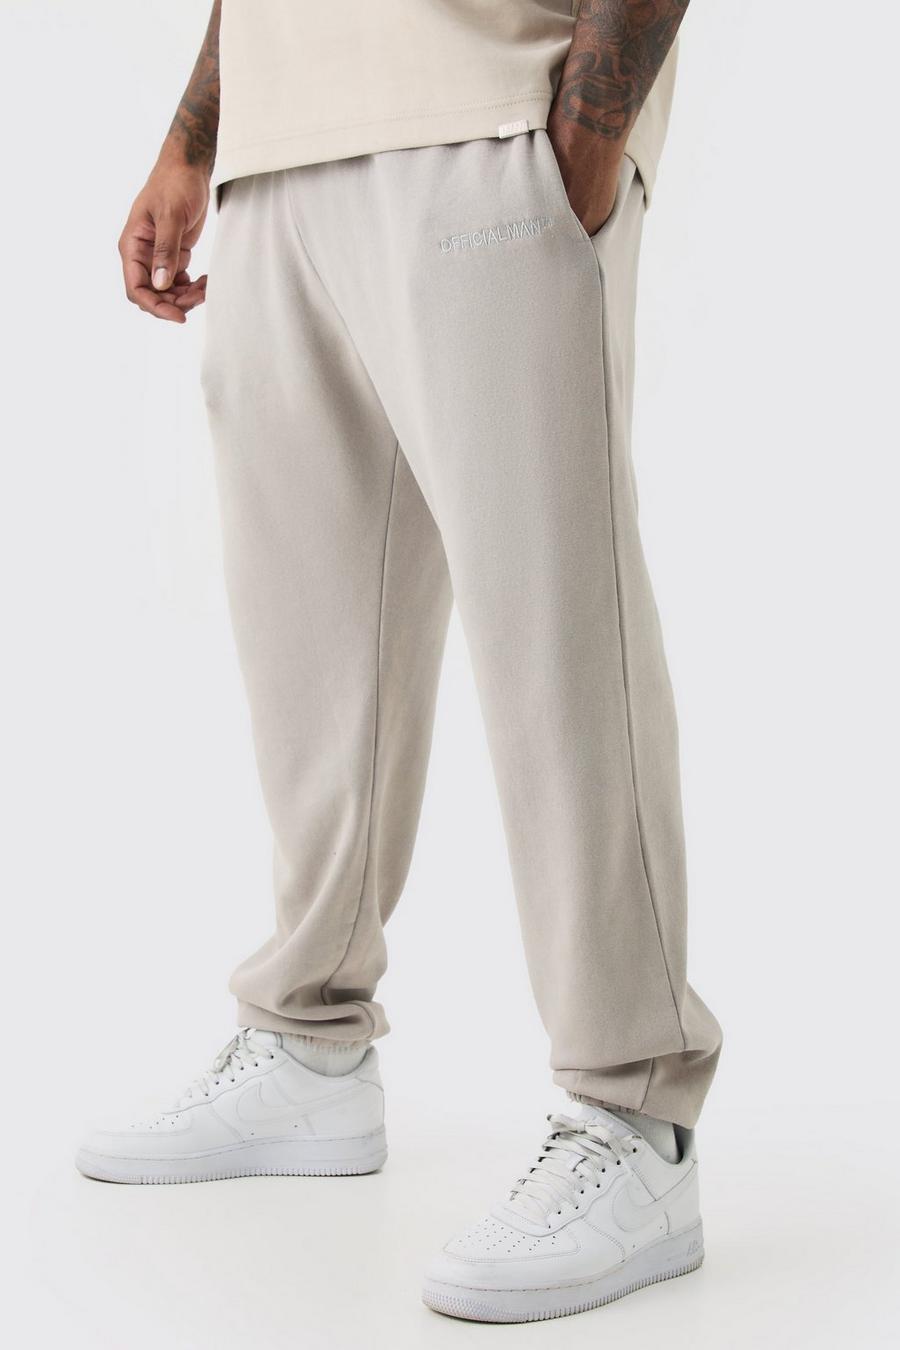 Pantaloni tuta Plus Size in lavaggio slavato Official Core Fit, Light grey image number 1